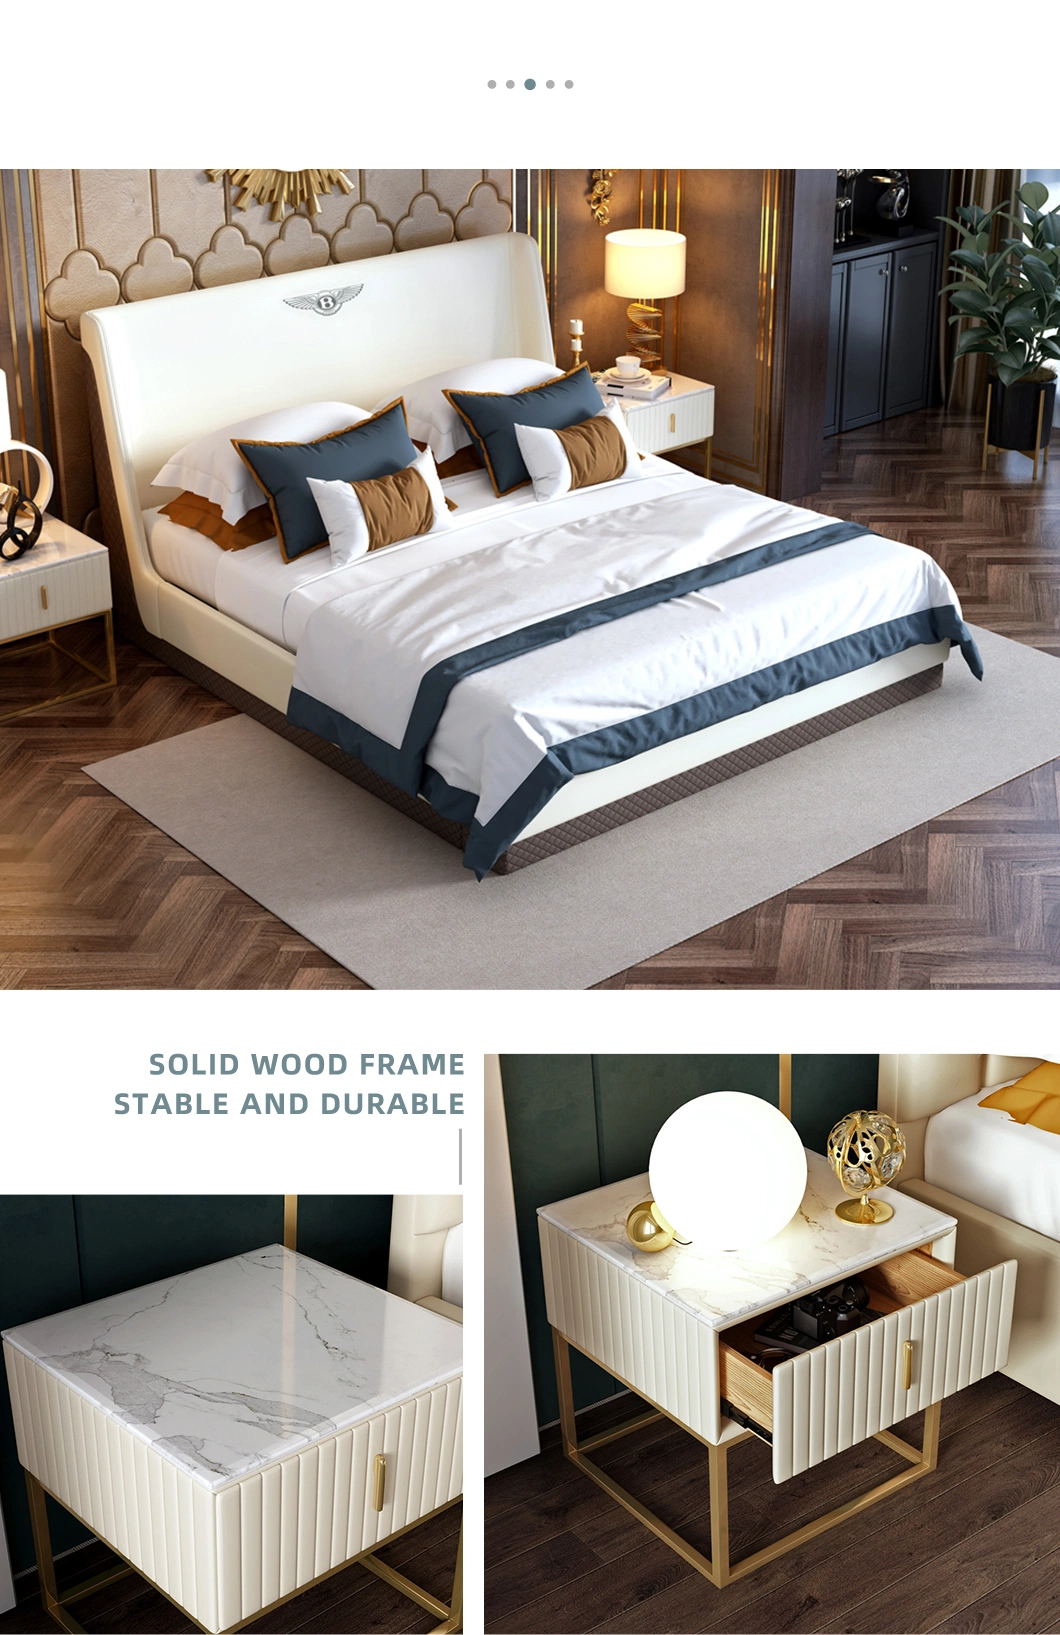 Modern Home Hotel Sofa Double Storage Bedroom Bed King Size Bedroom Furniture Set